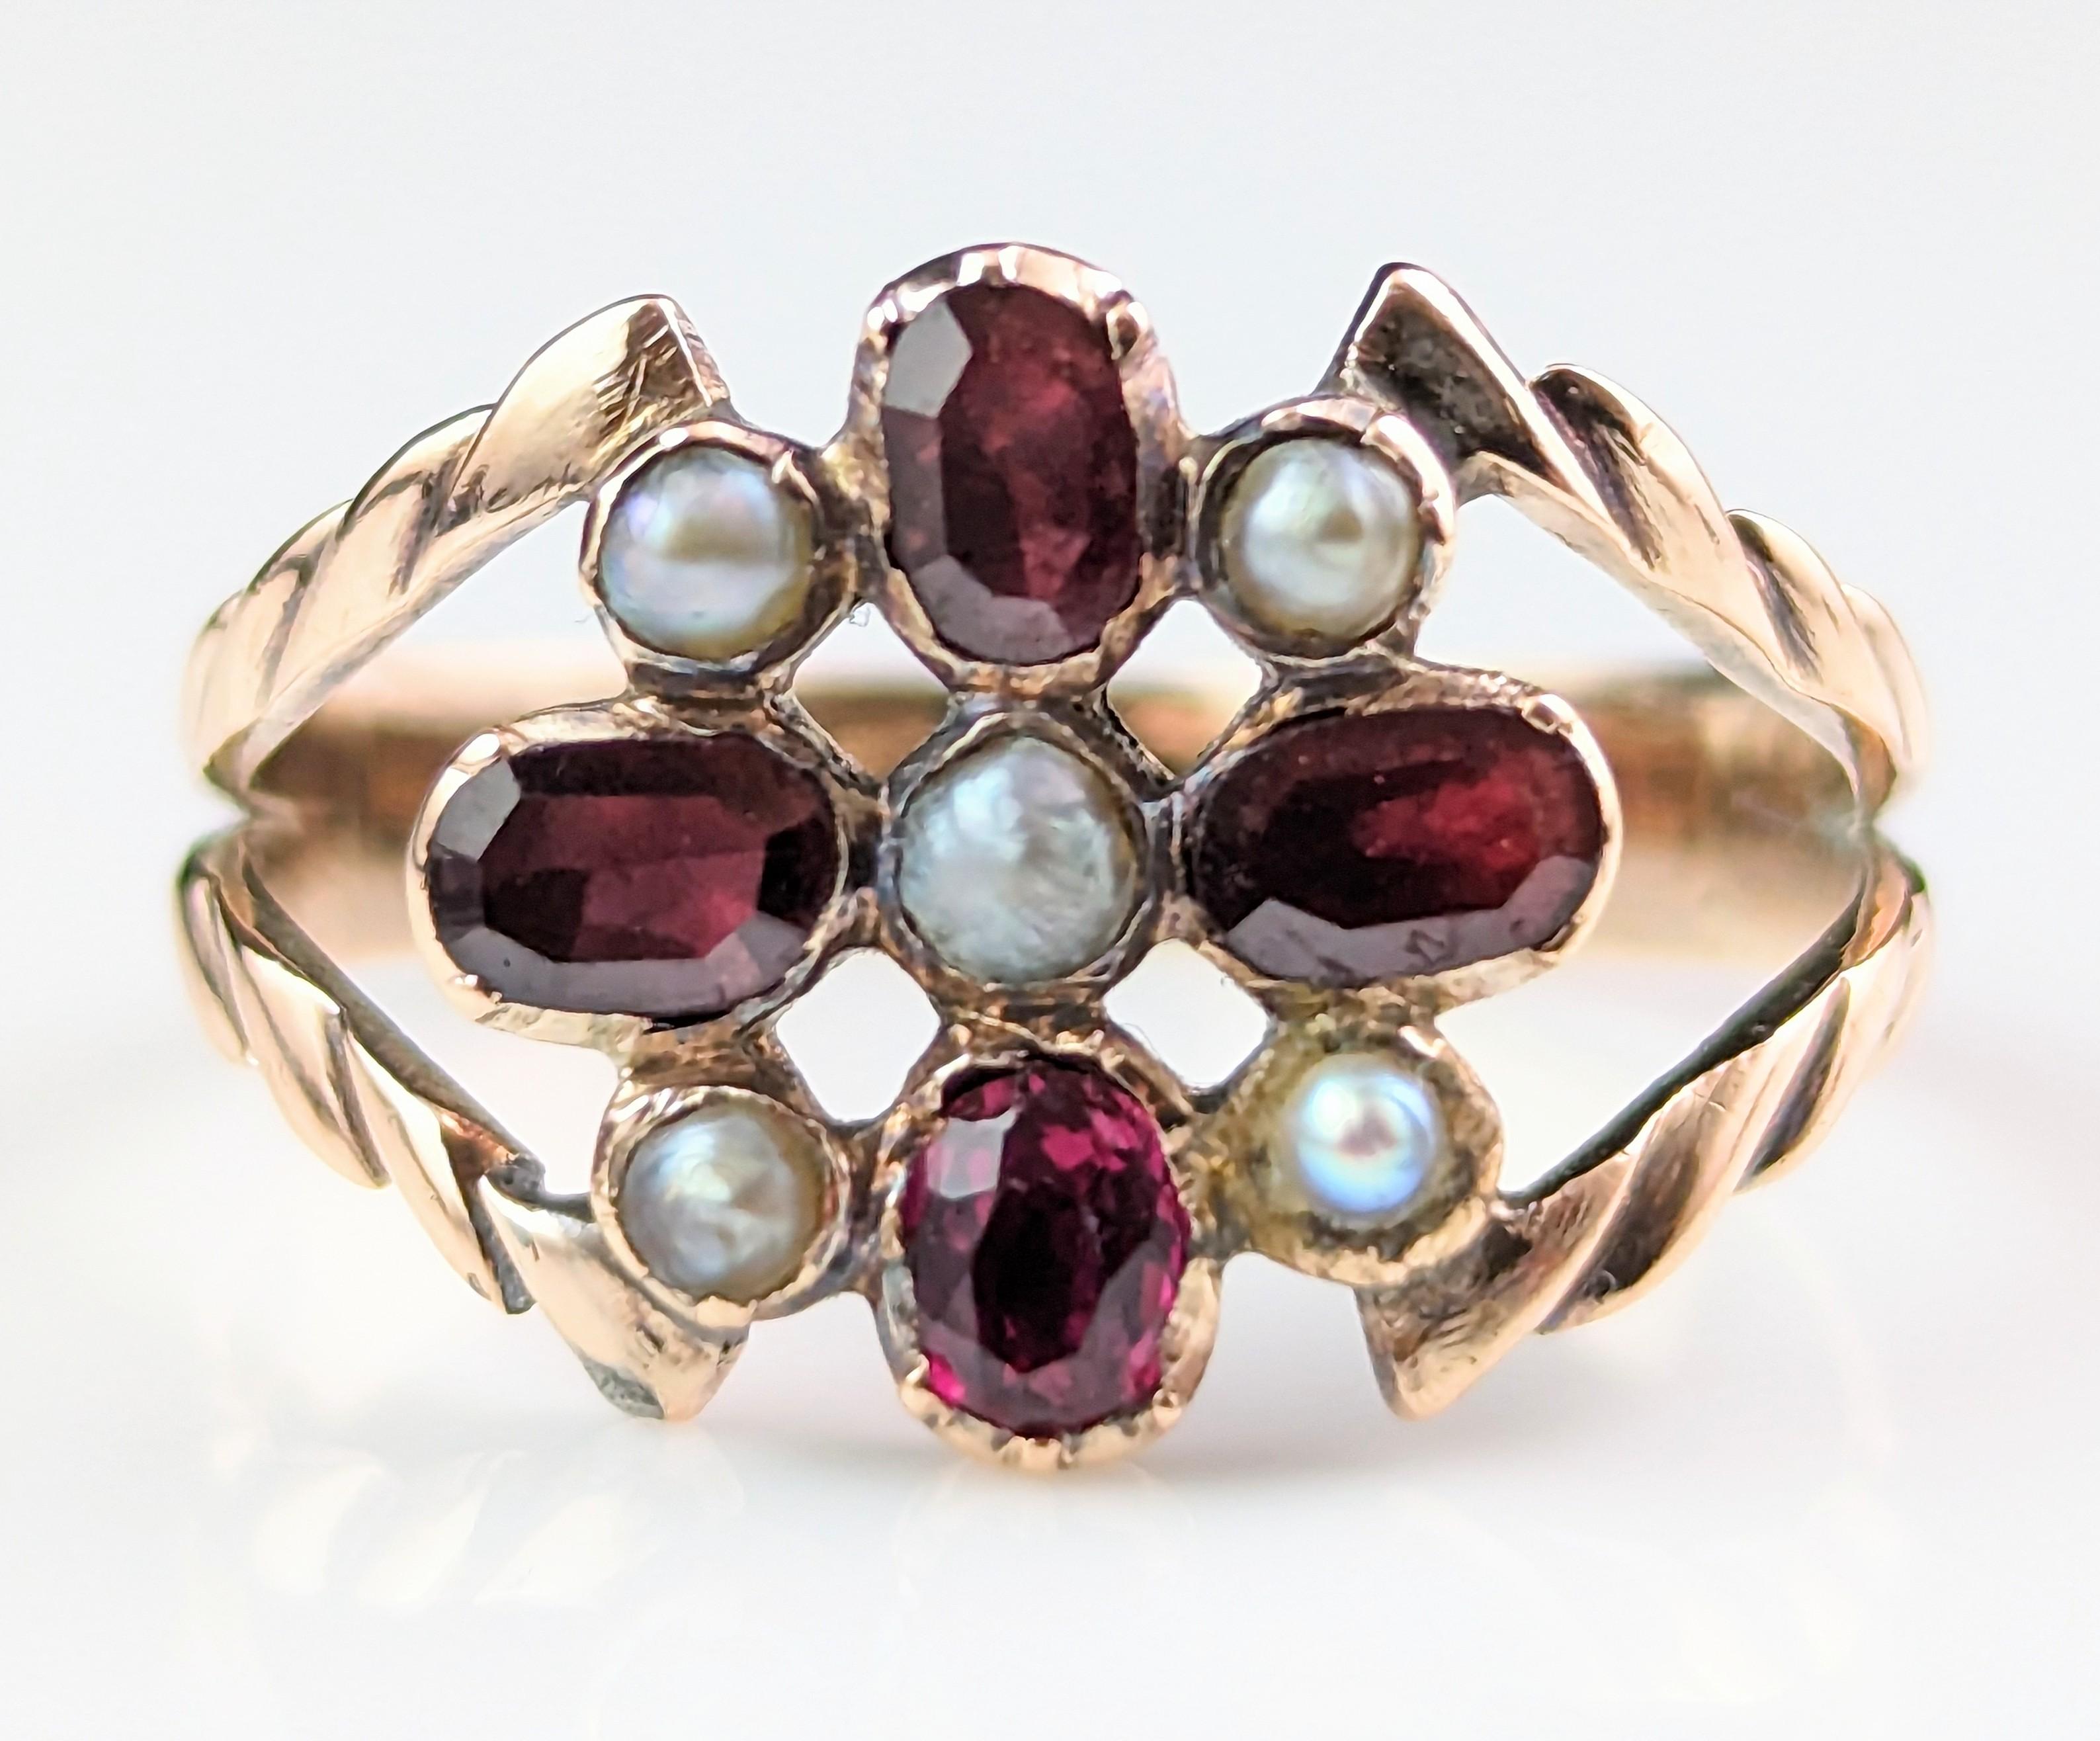 Antique Regency Era Floral Ring, Flat Cut Garnet, Pearl and Ruby, 9k Gold 1